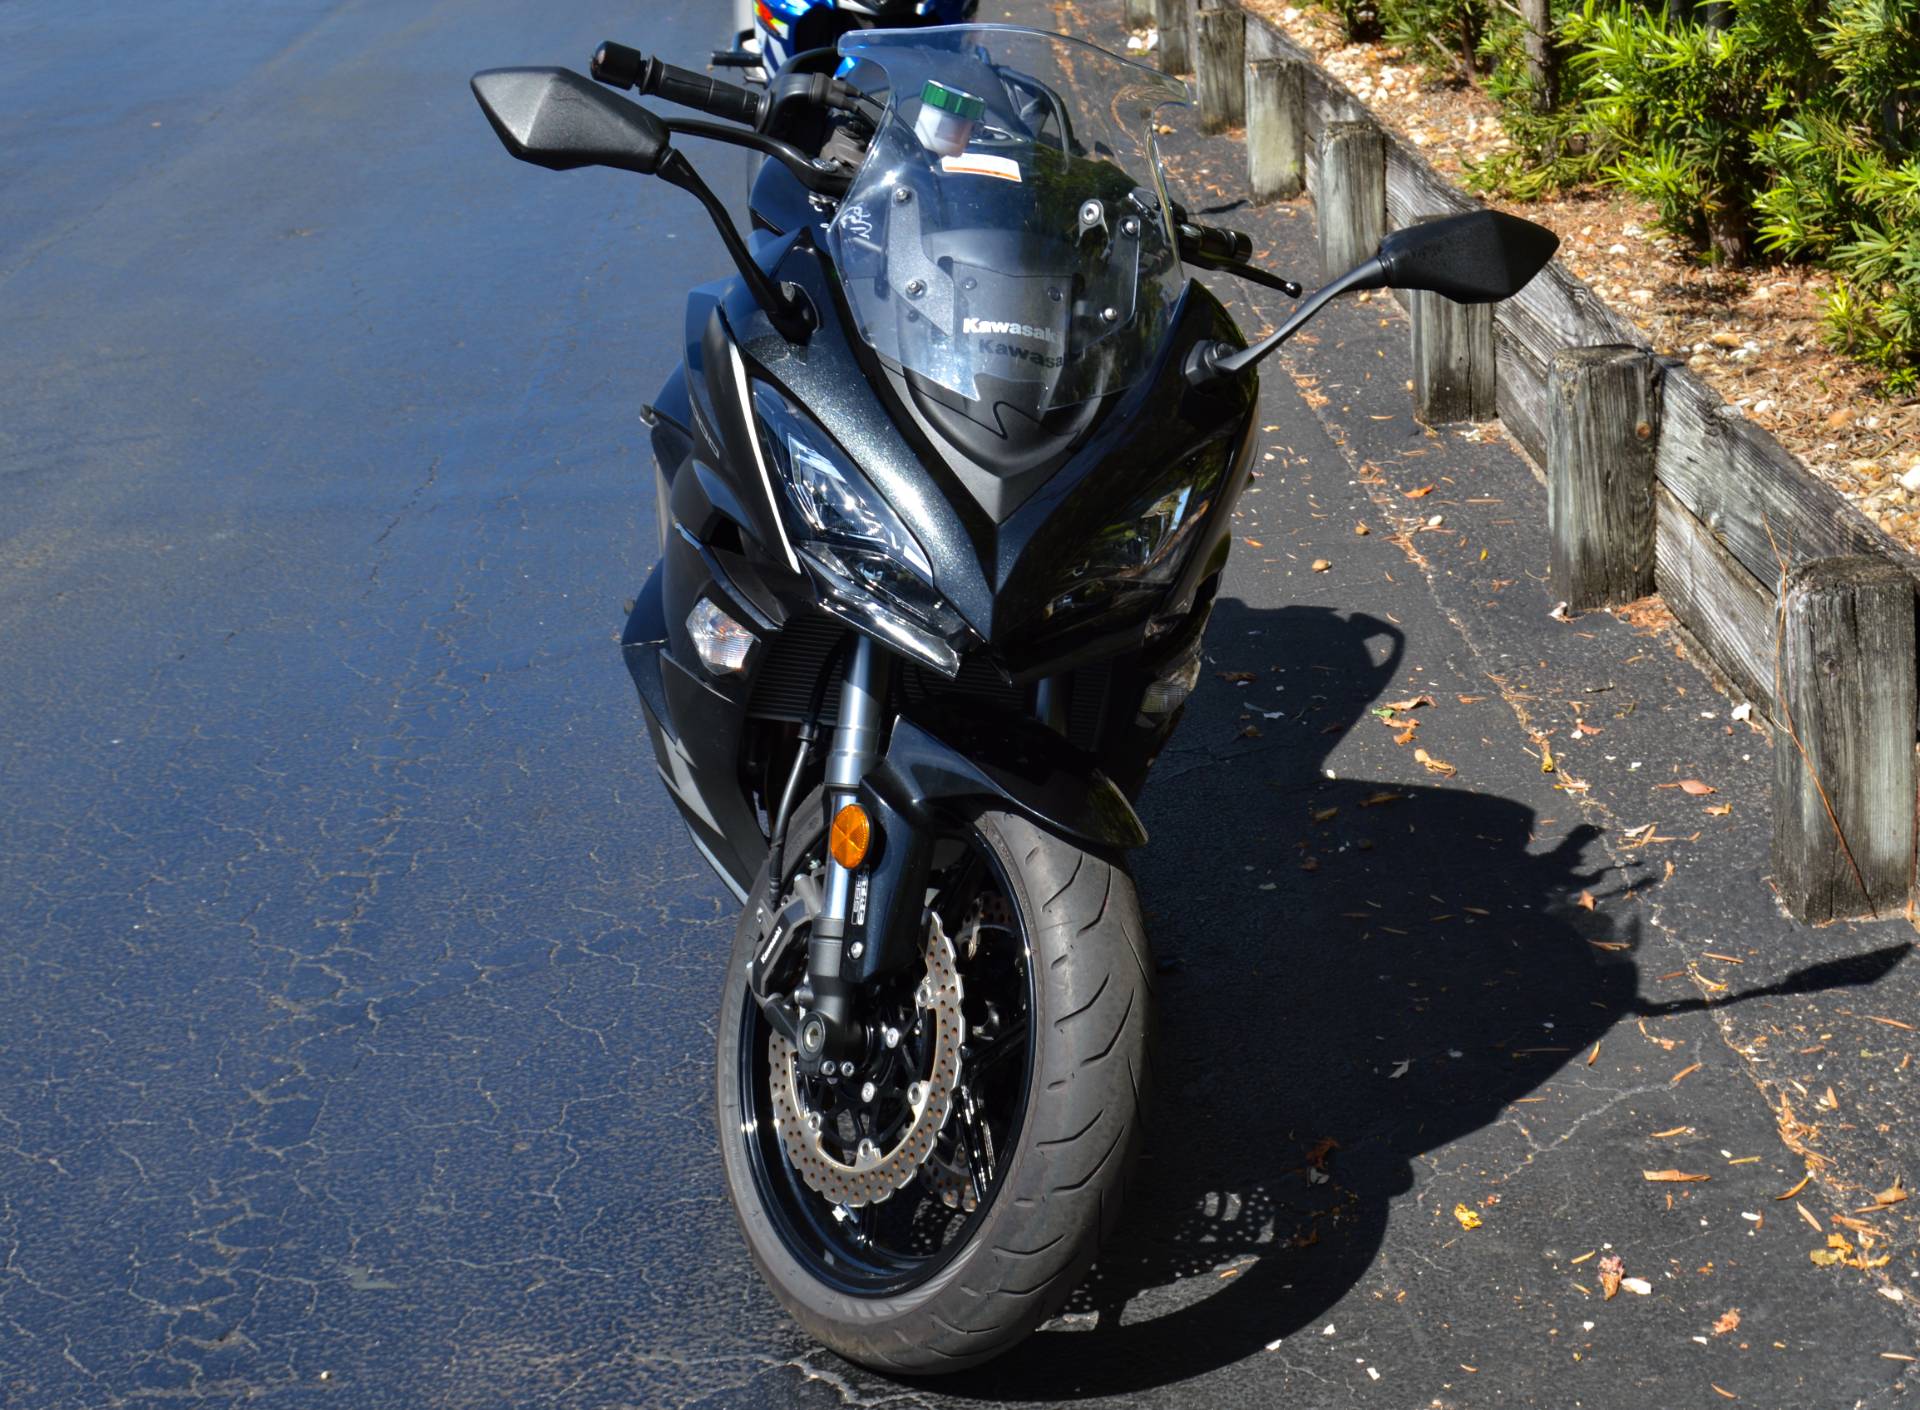 Used 2019 Kawasaki Ninja 1000 ABS | Motorcycles in Boca Raton FL | Metallic Spark Black / Metallic Matte Carbon Gray